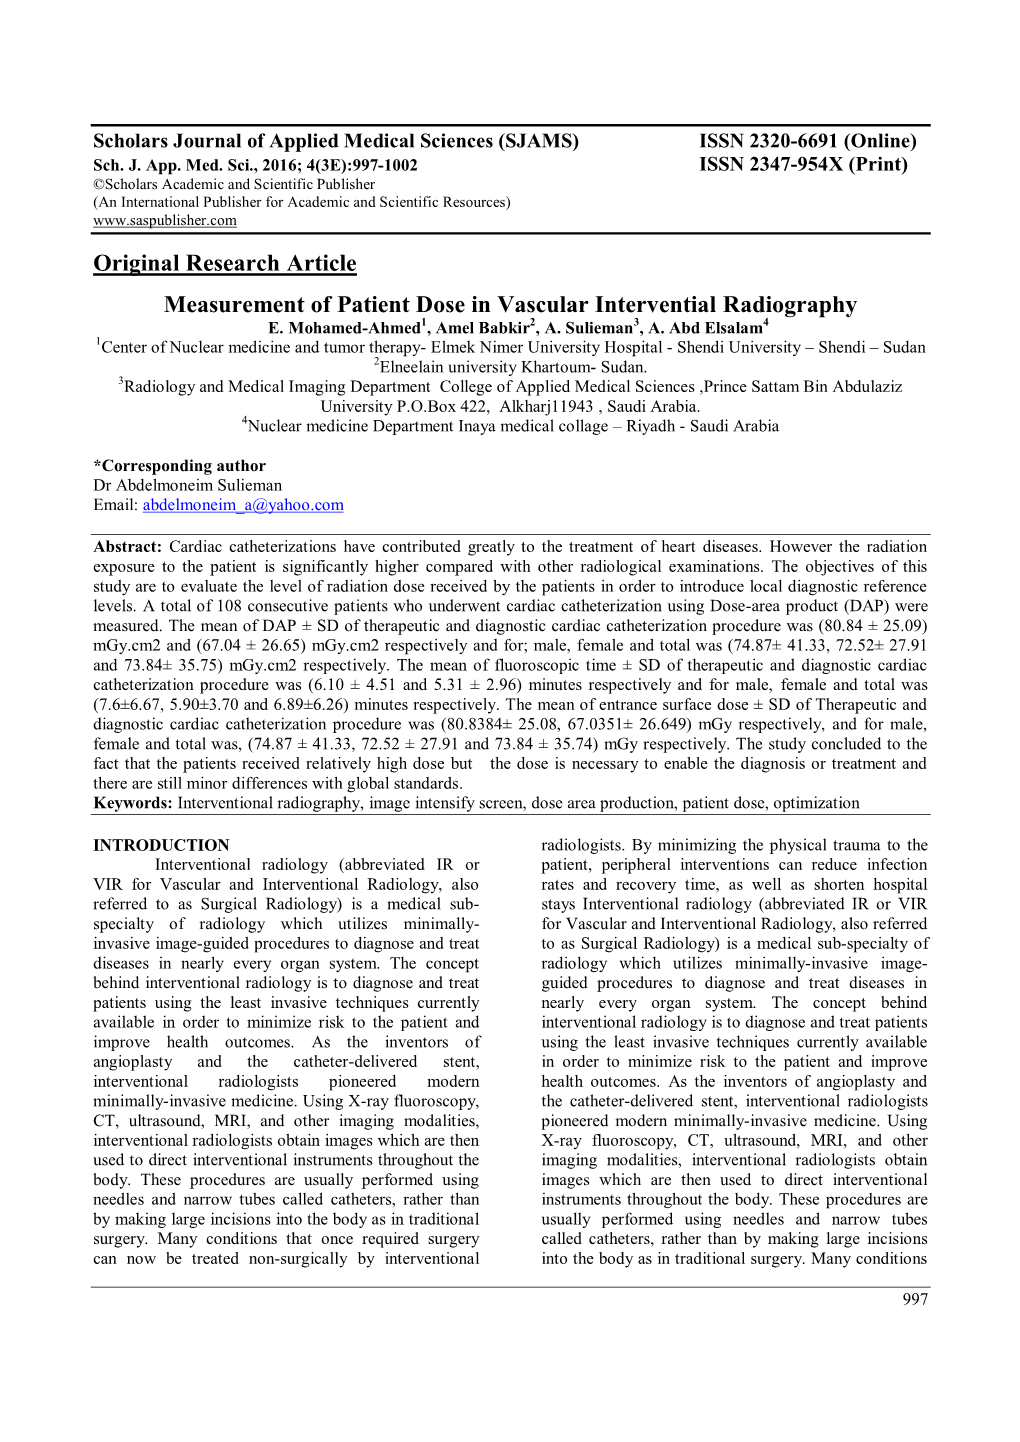 Original Research Article Measurement of Patient Dose In